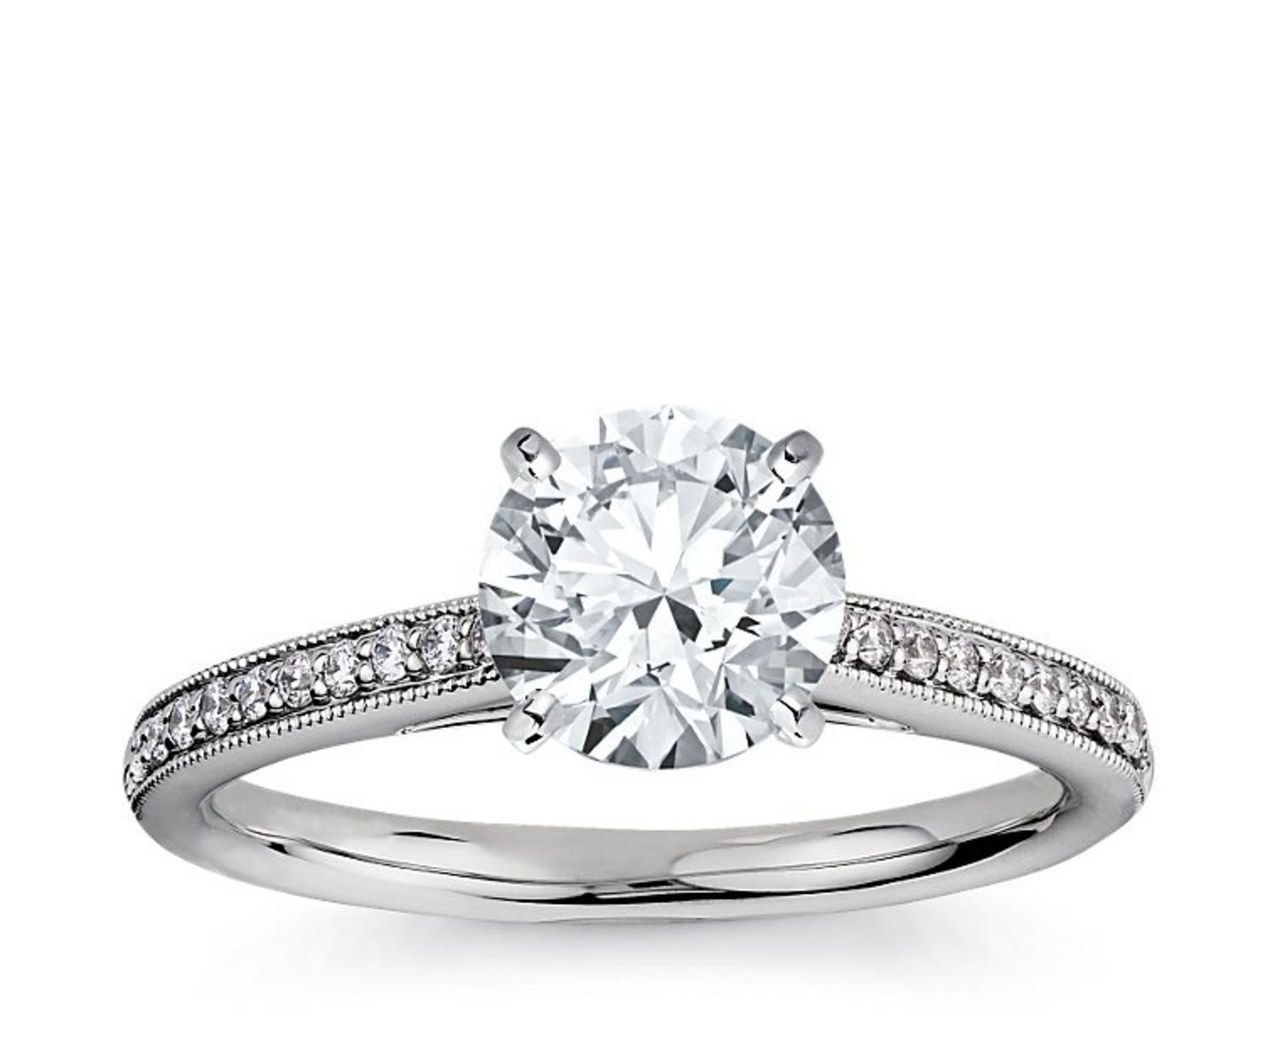 3 most popular blue nile diamond engagement rings 0808